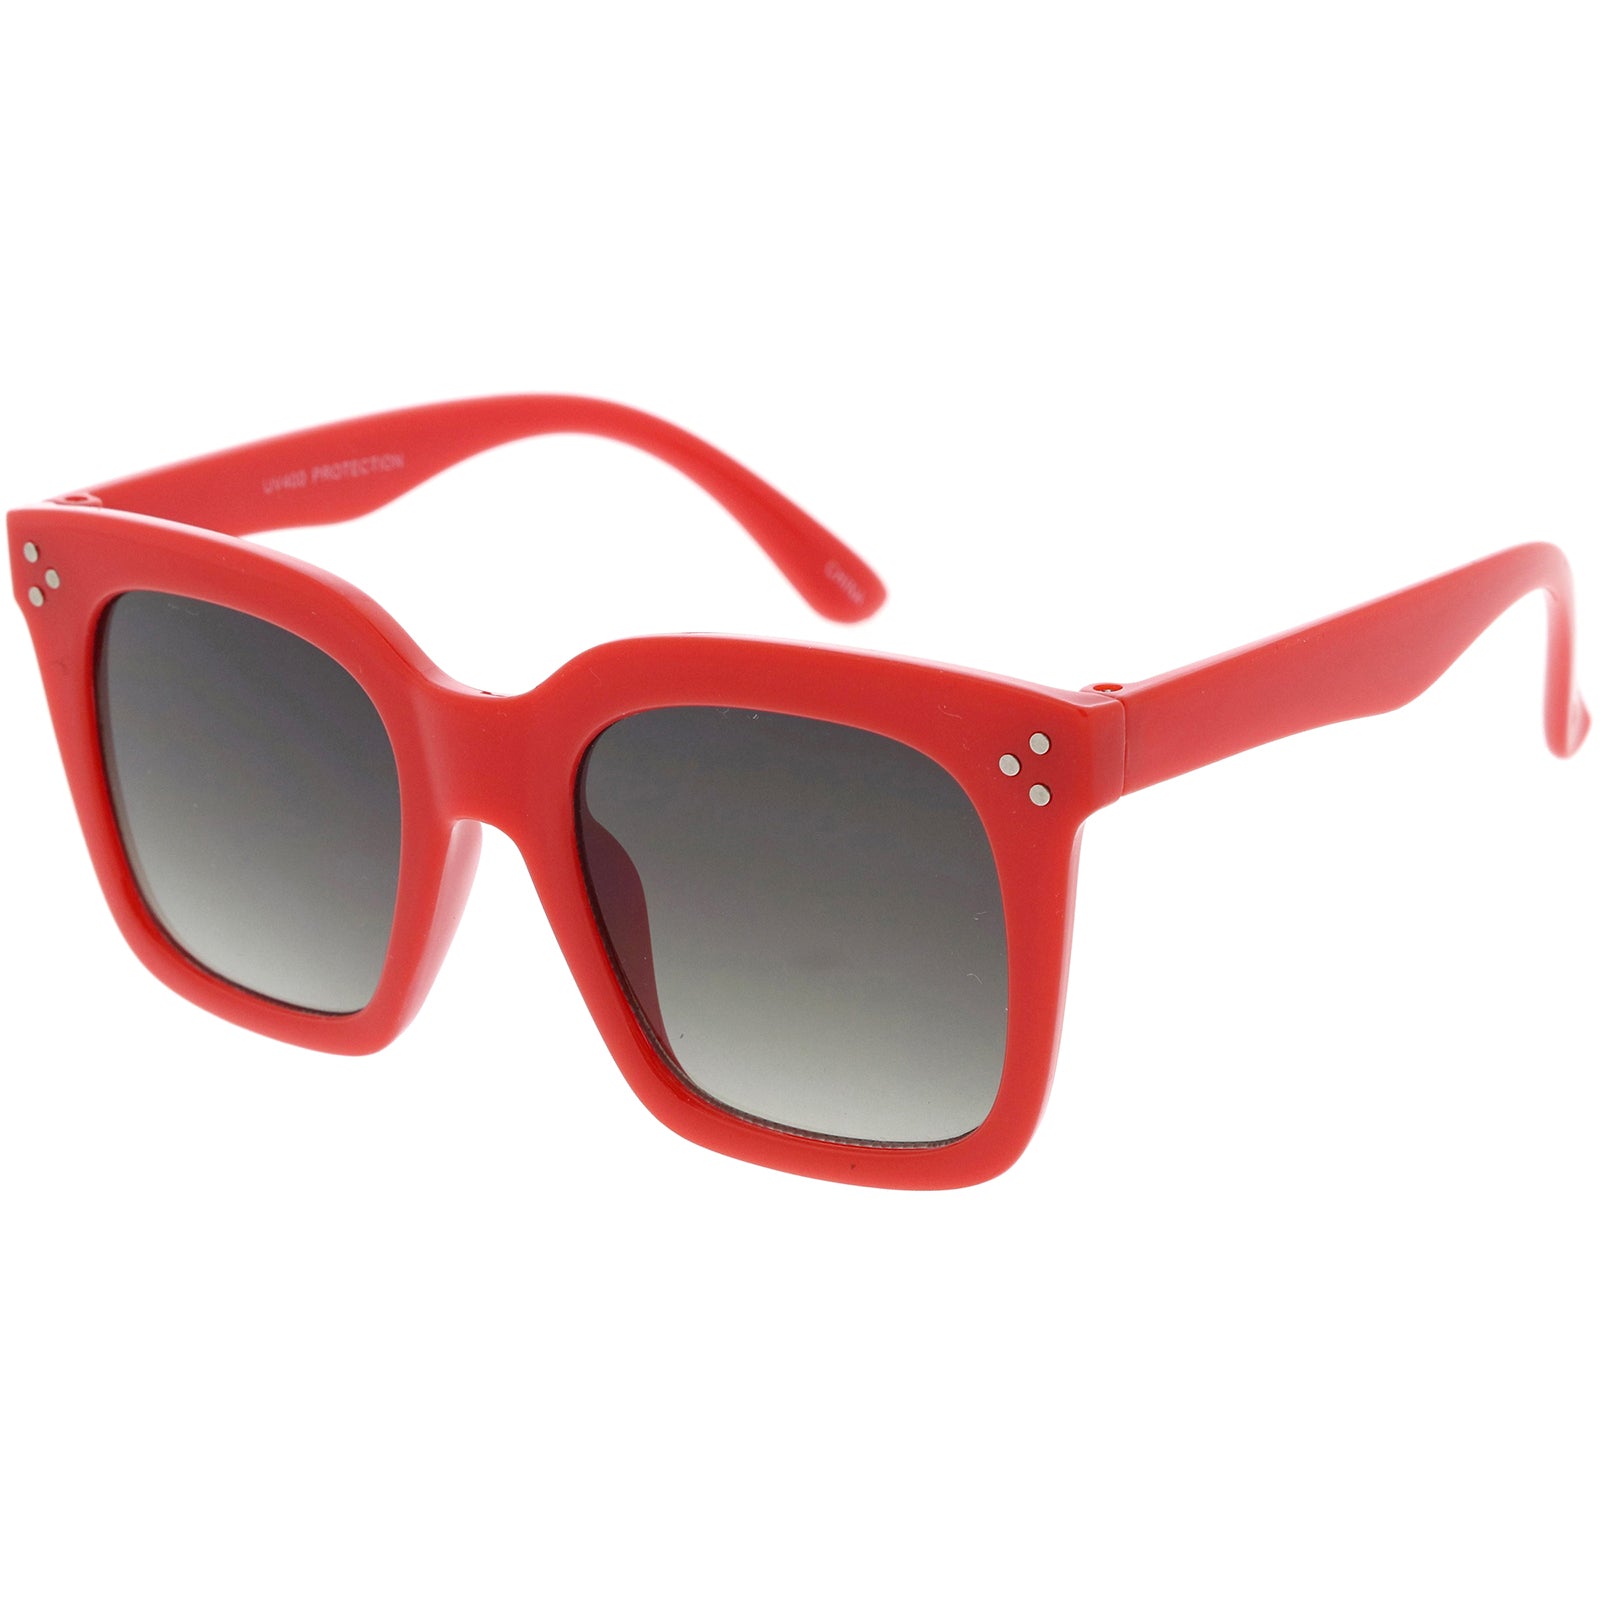 Kids Retro Oversized Square Sunglasses with Flat Lens for Children 45mm